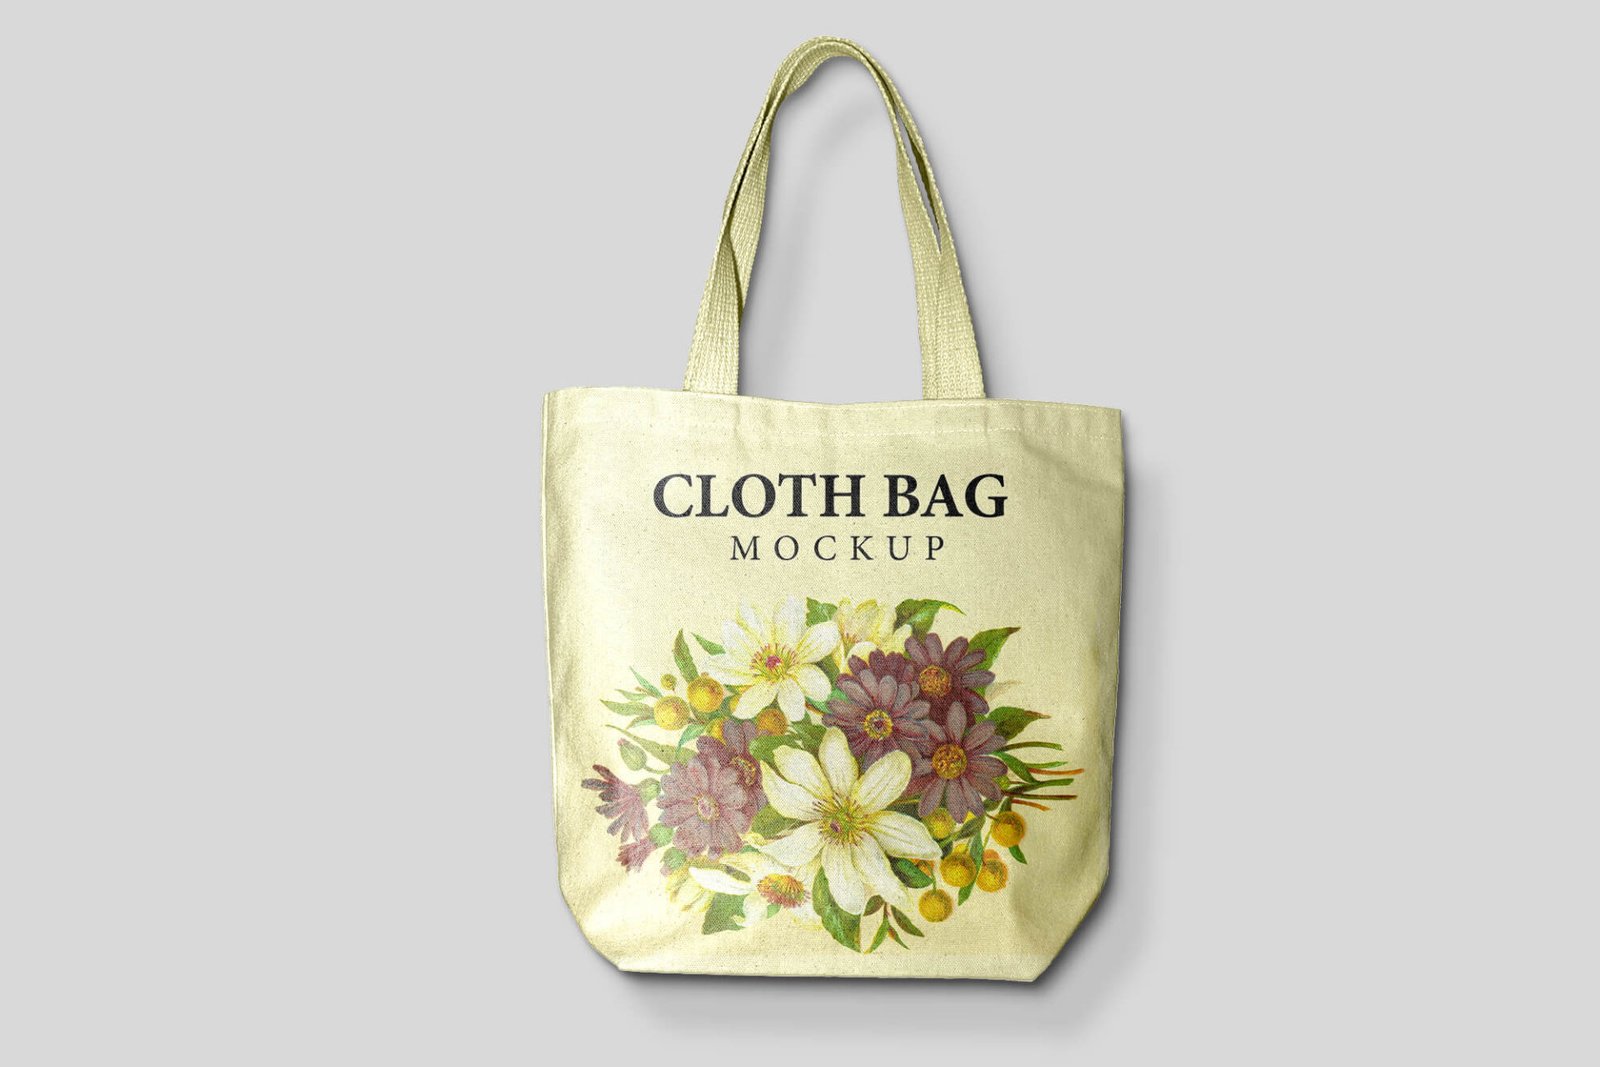 Free Cloth Bag Mockup PSD Template - Mockup Den